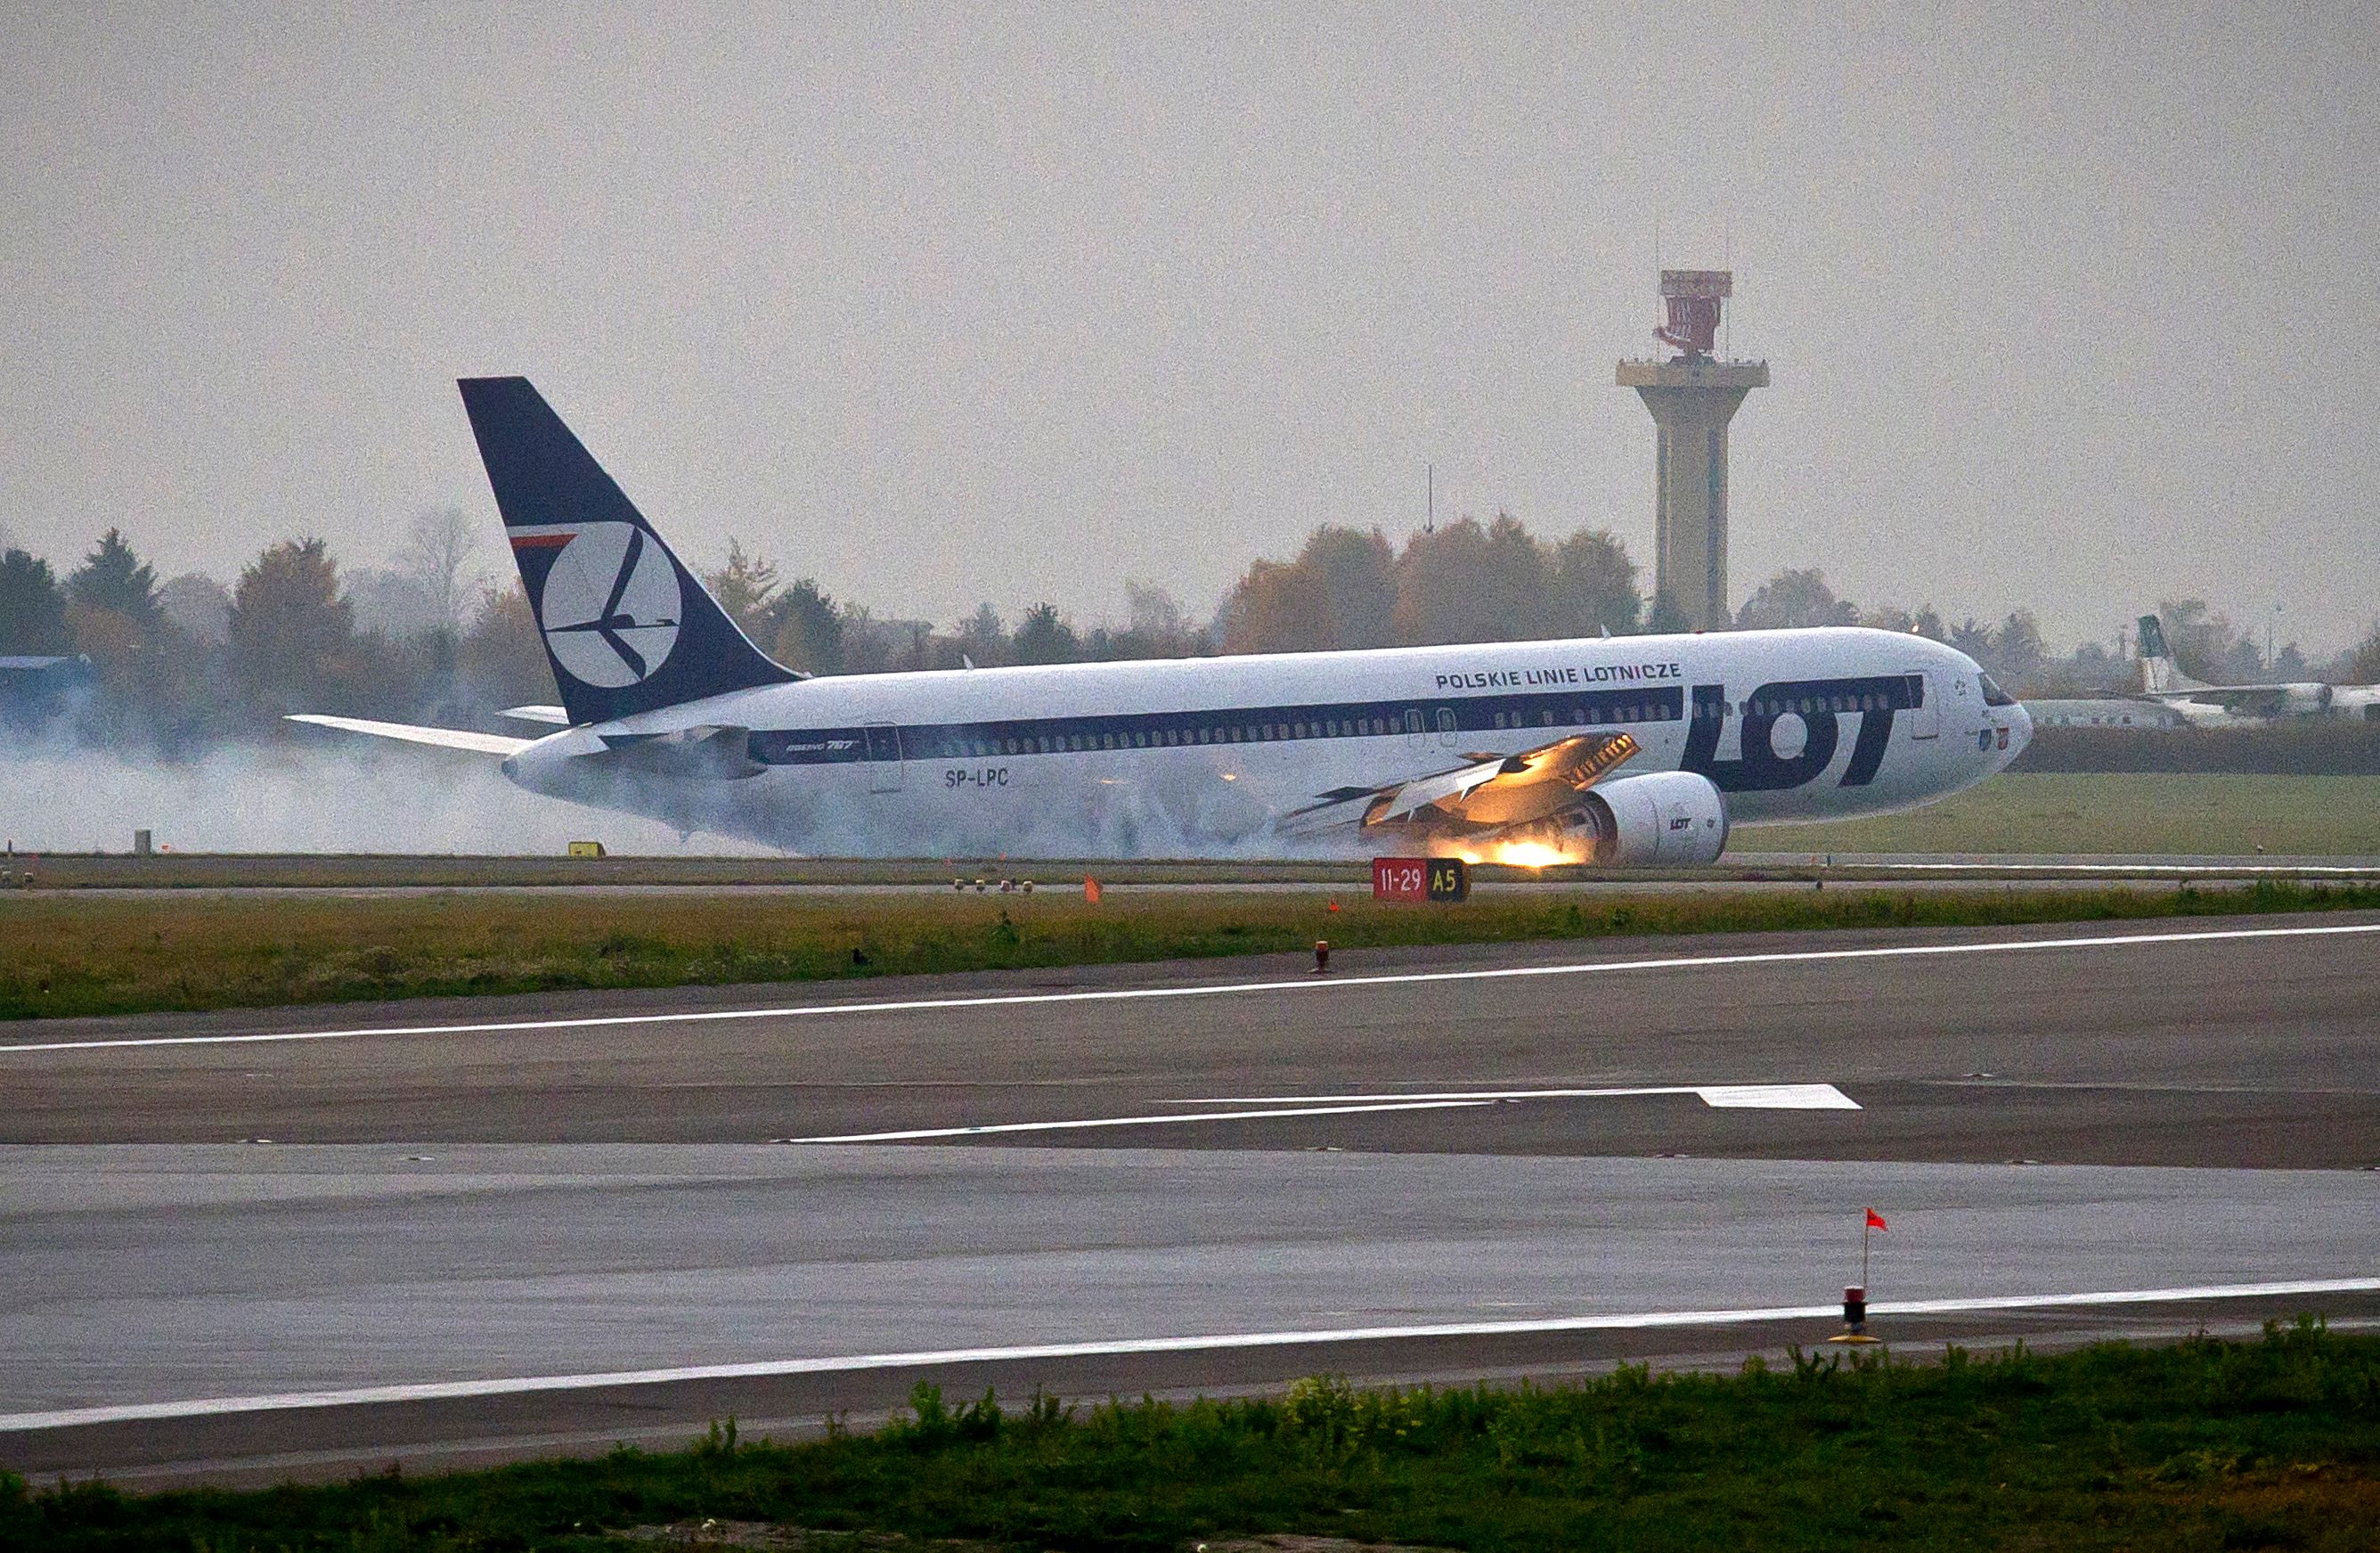 LOT Polish Airlines Flight 16 Belly Landing